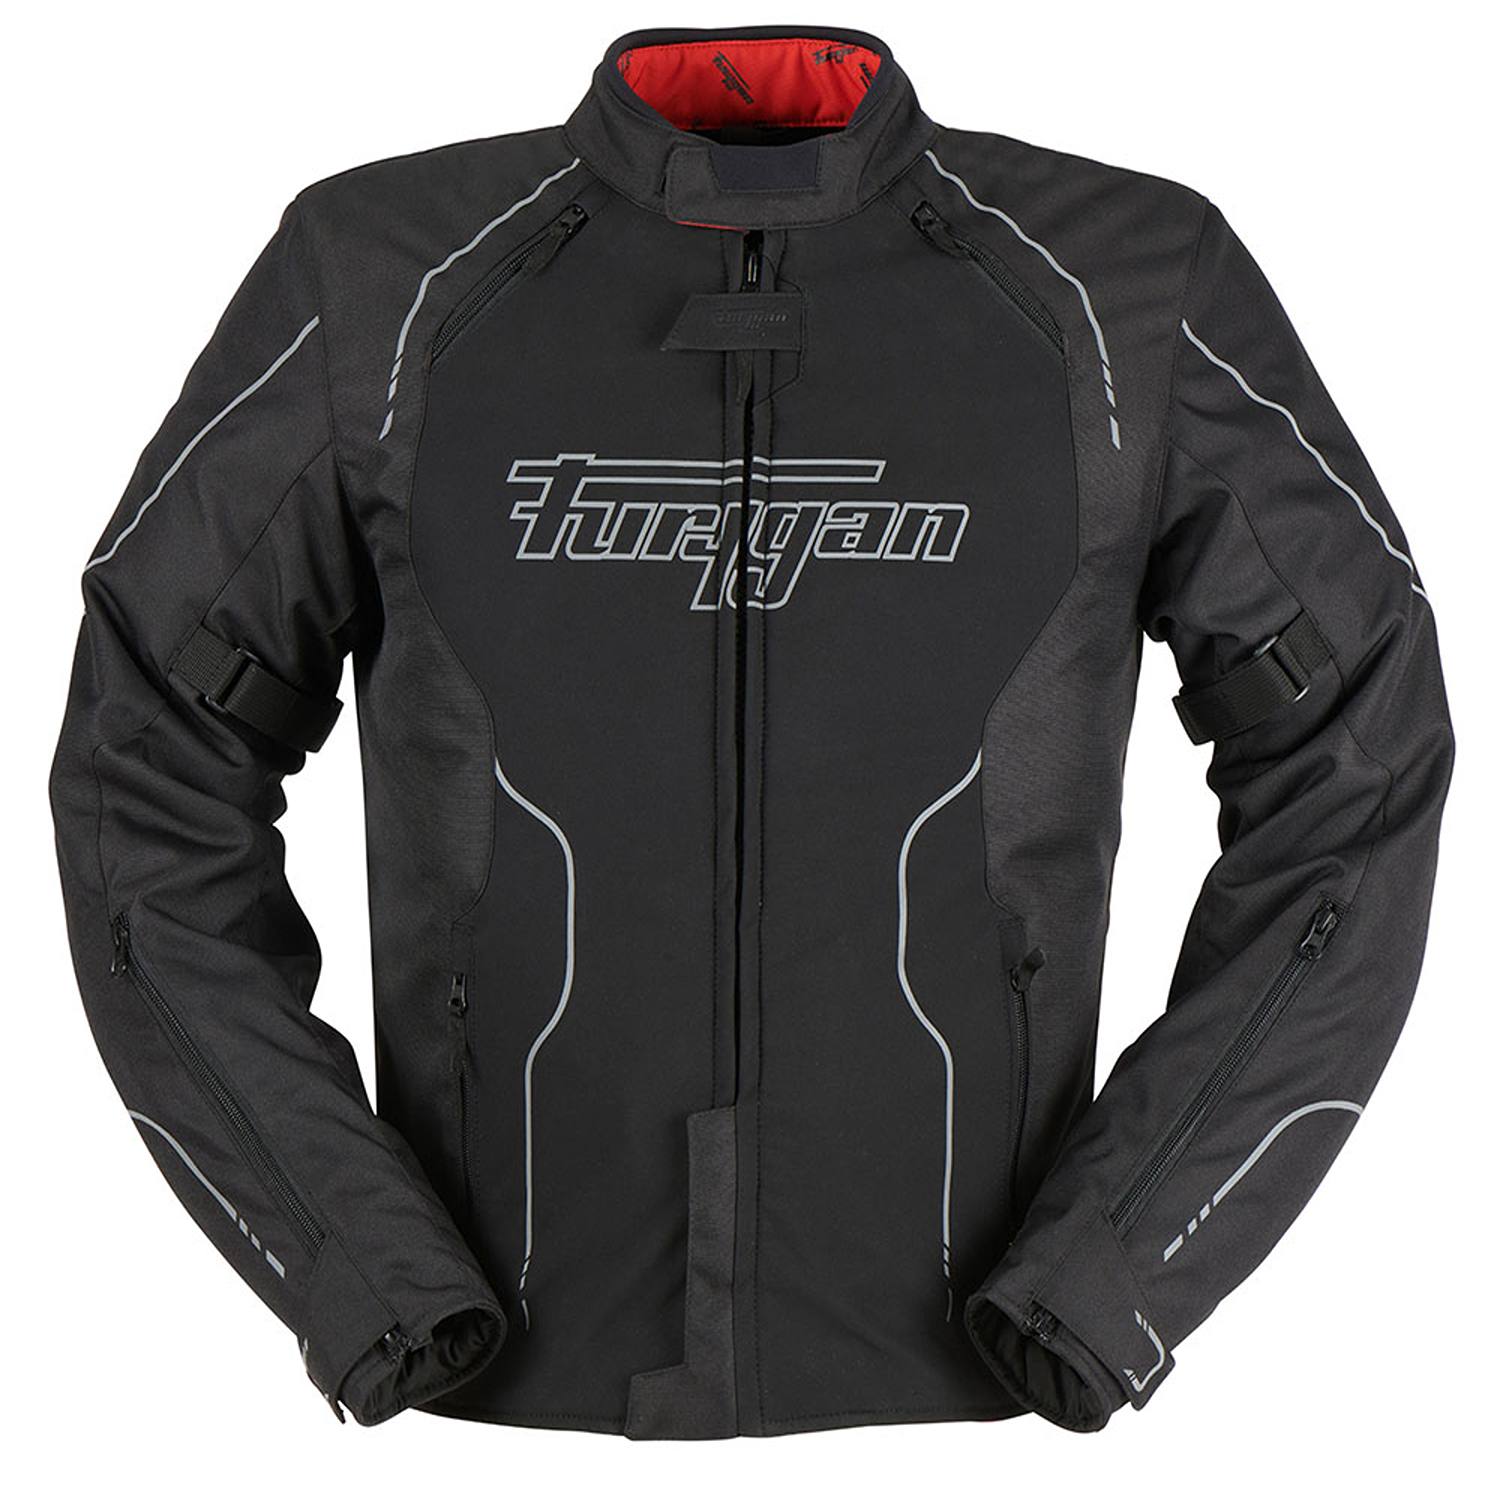 Image of Furygan Legacy 2W1 Jacket Black Reflective Grey Size XL ID 3435980340551